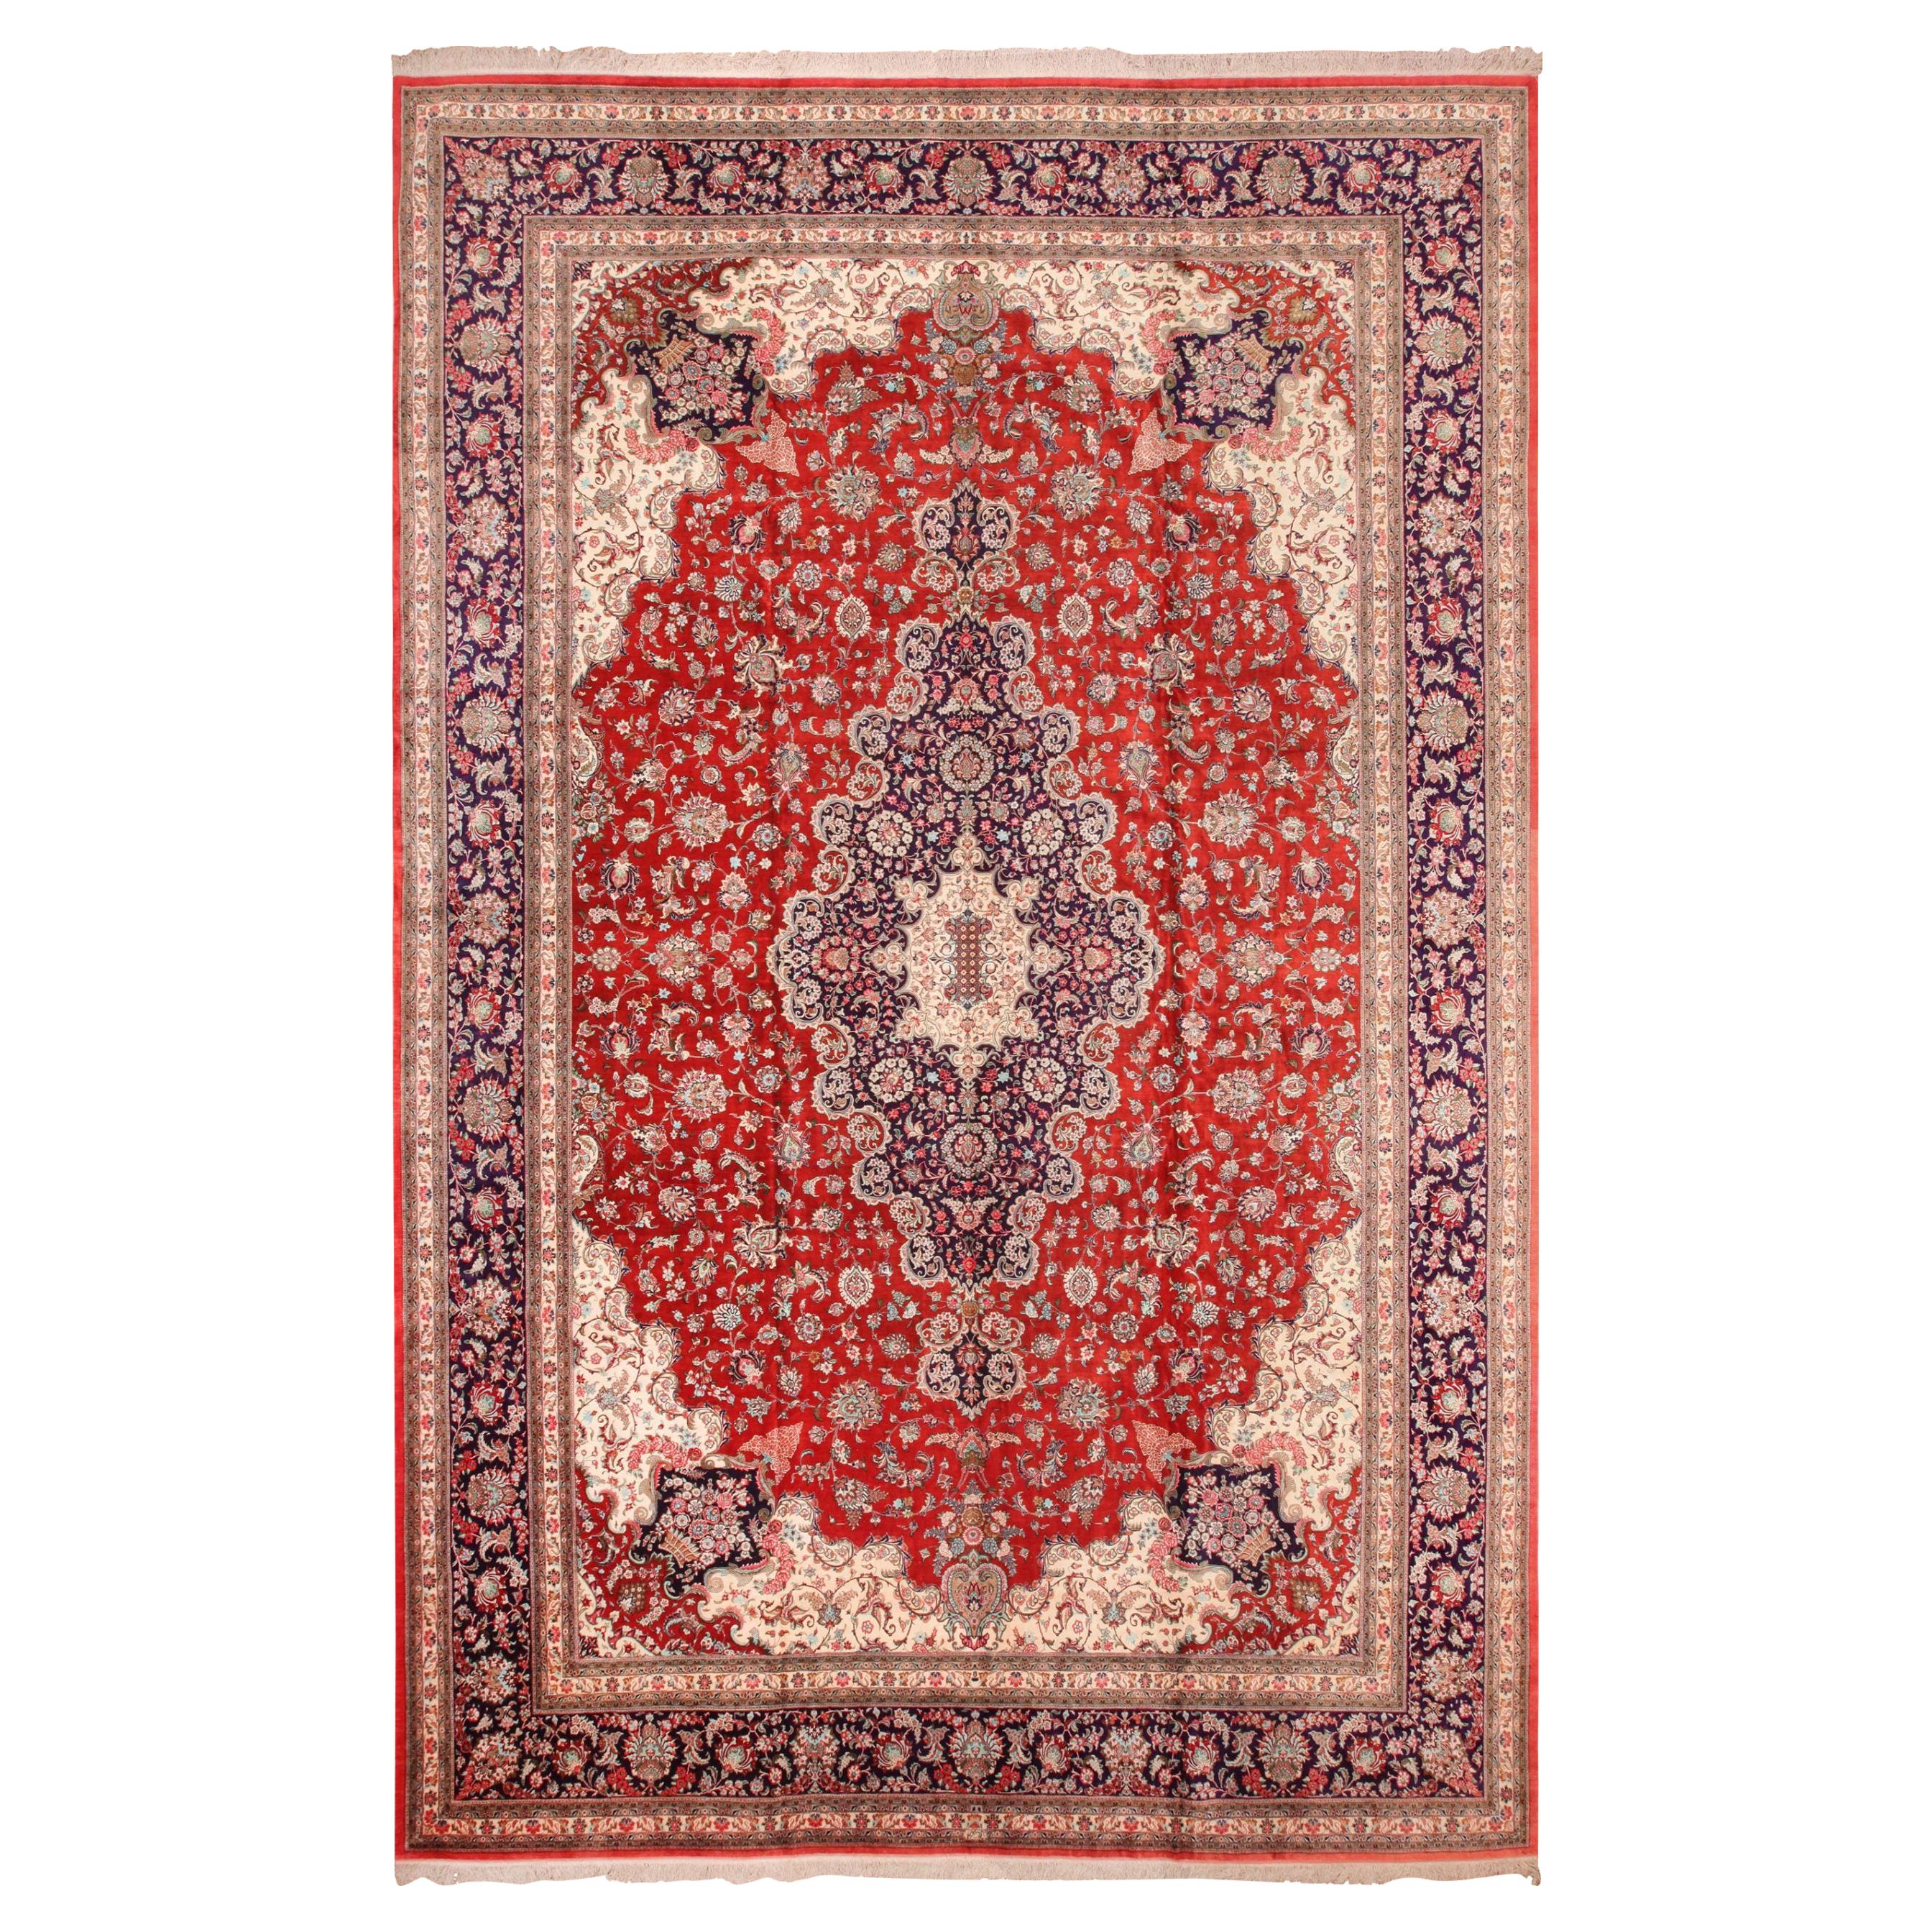 Large Floral Vintage Persian Silk Qum Rug. Size: 13 ft x 19 ft 9 in 